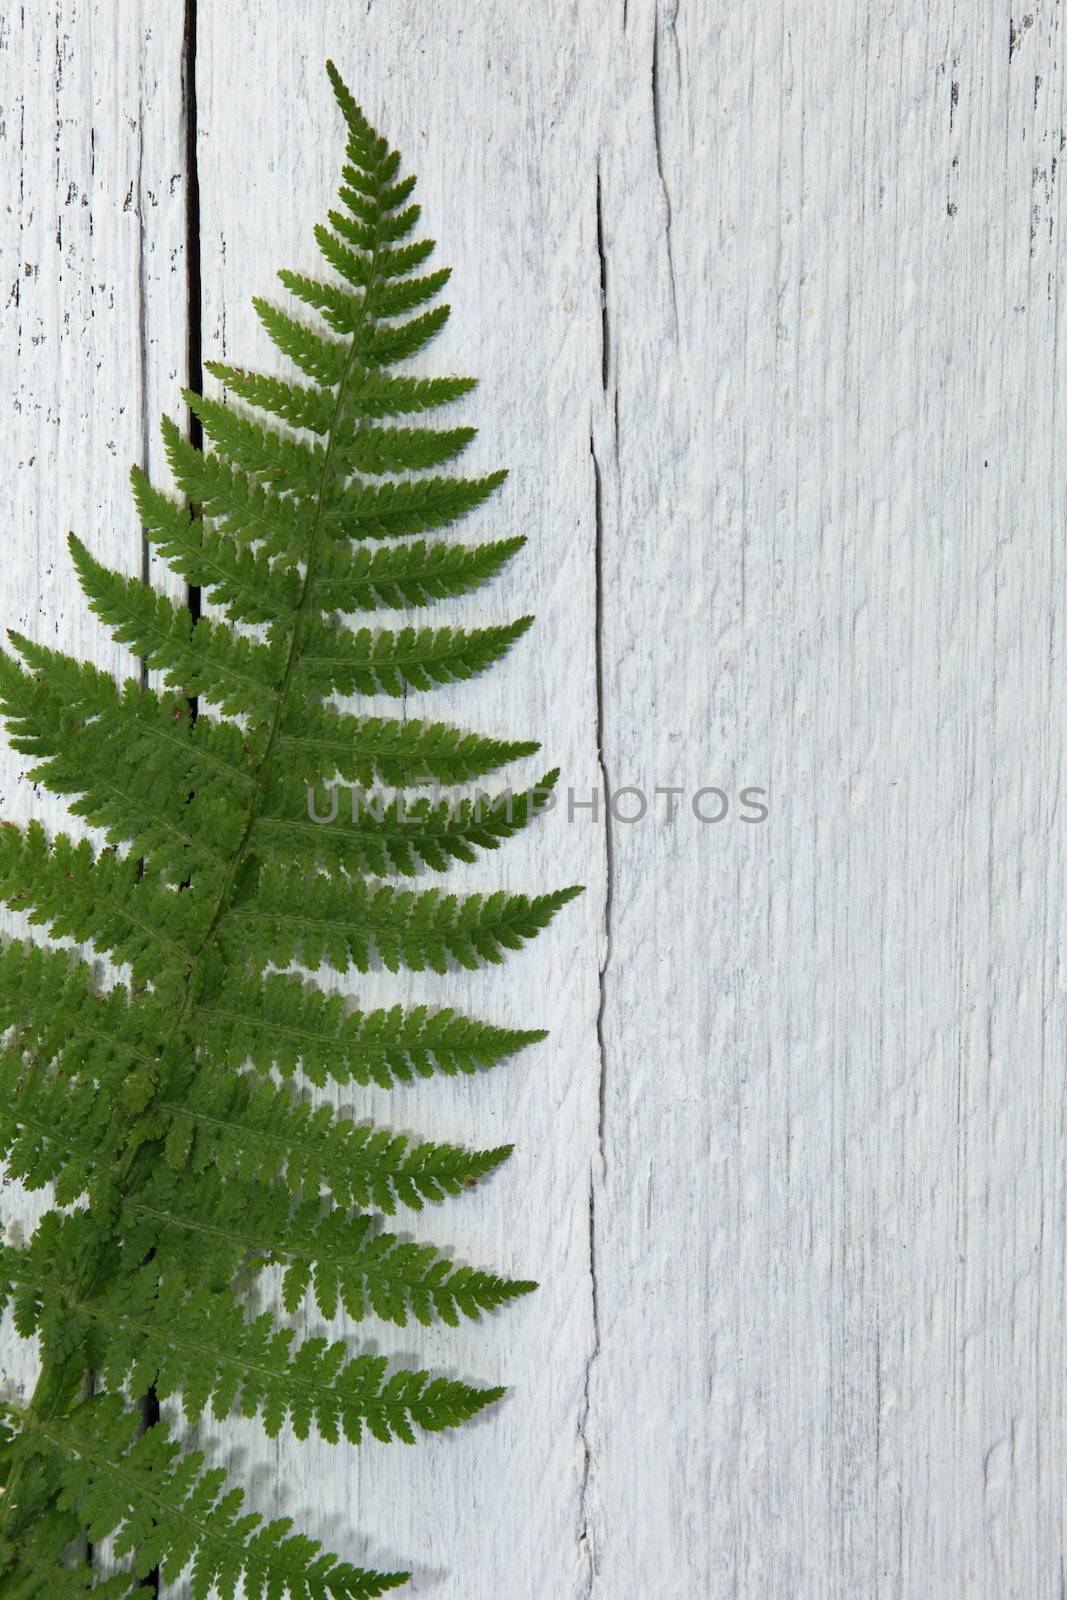 Green fern leaf on textured white wood by Farina6000